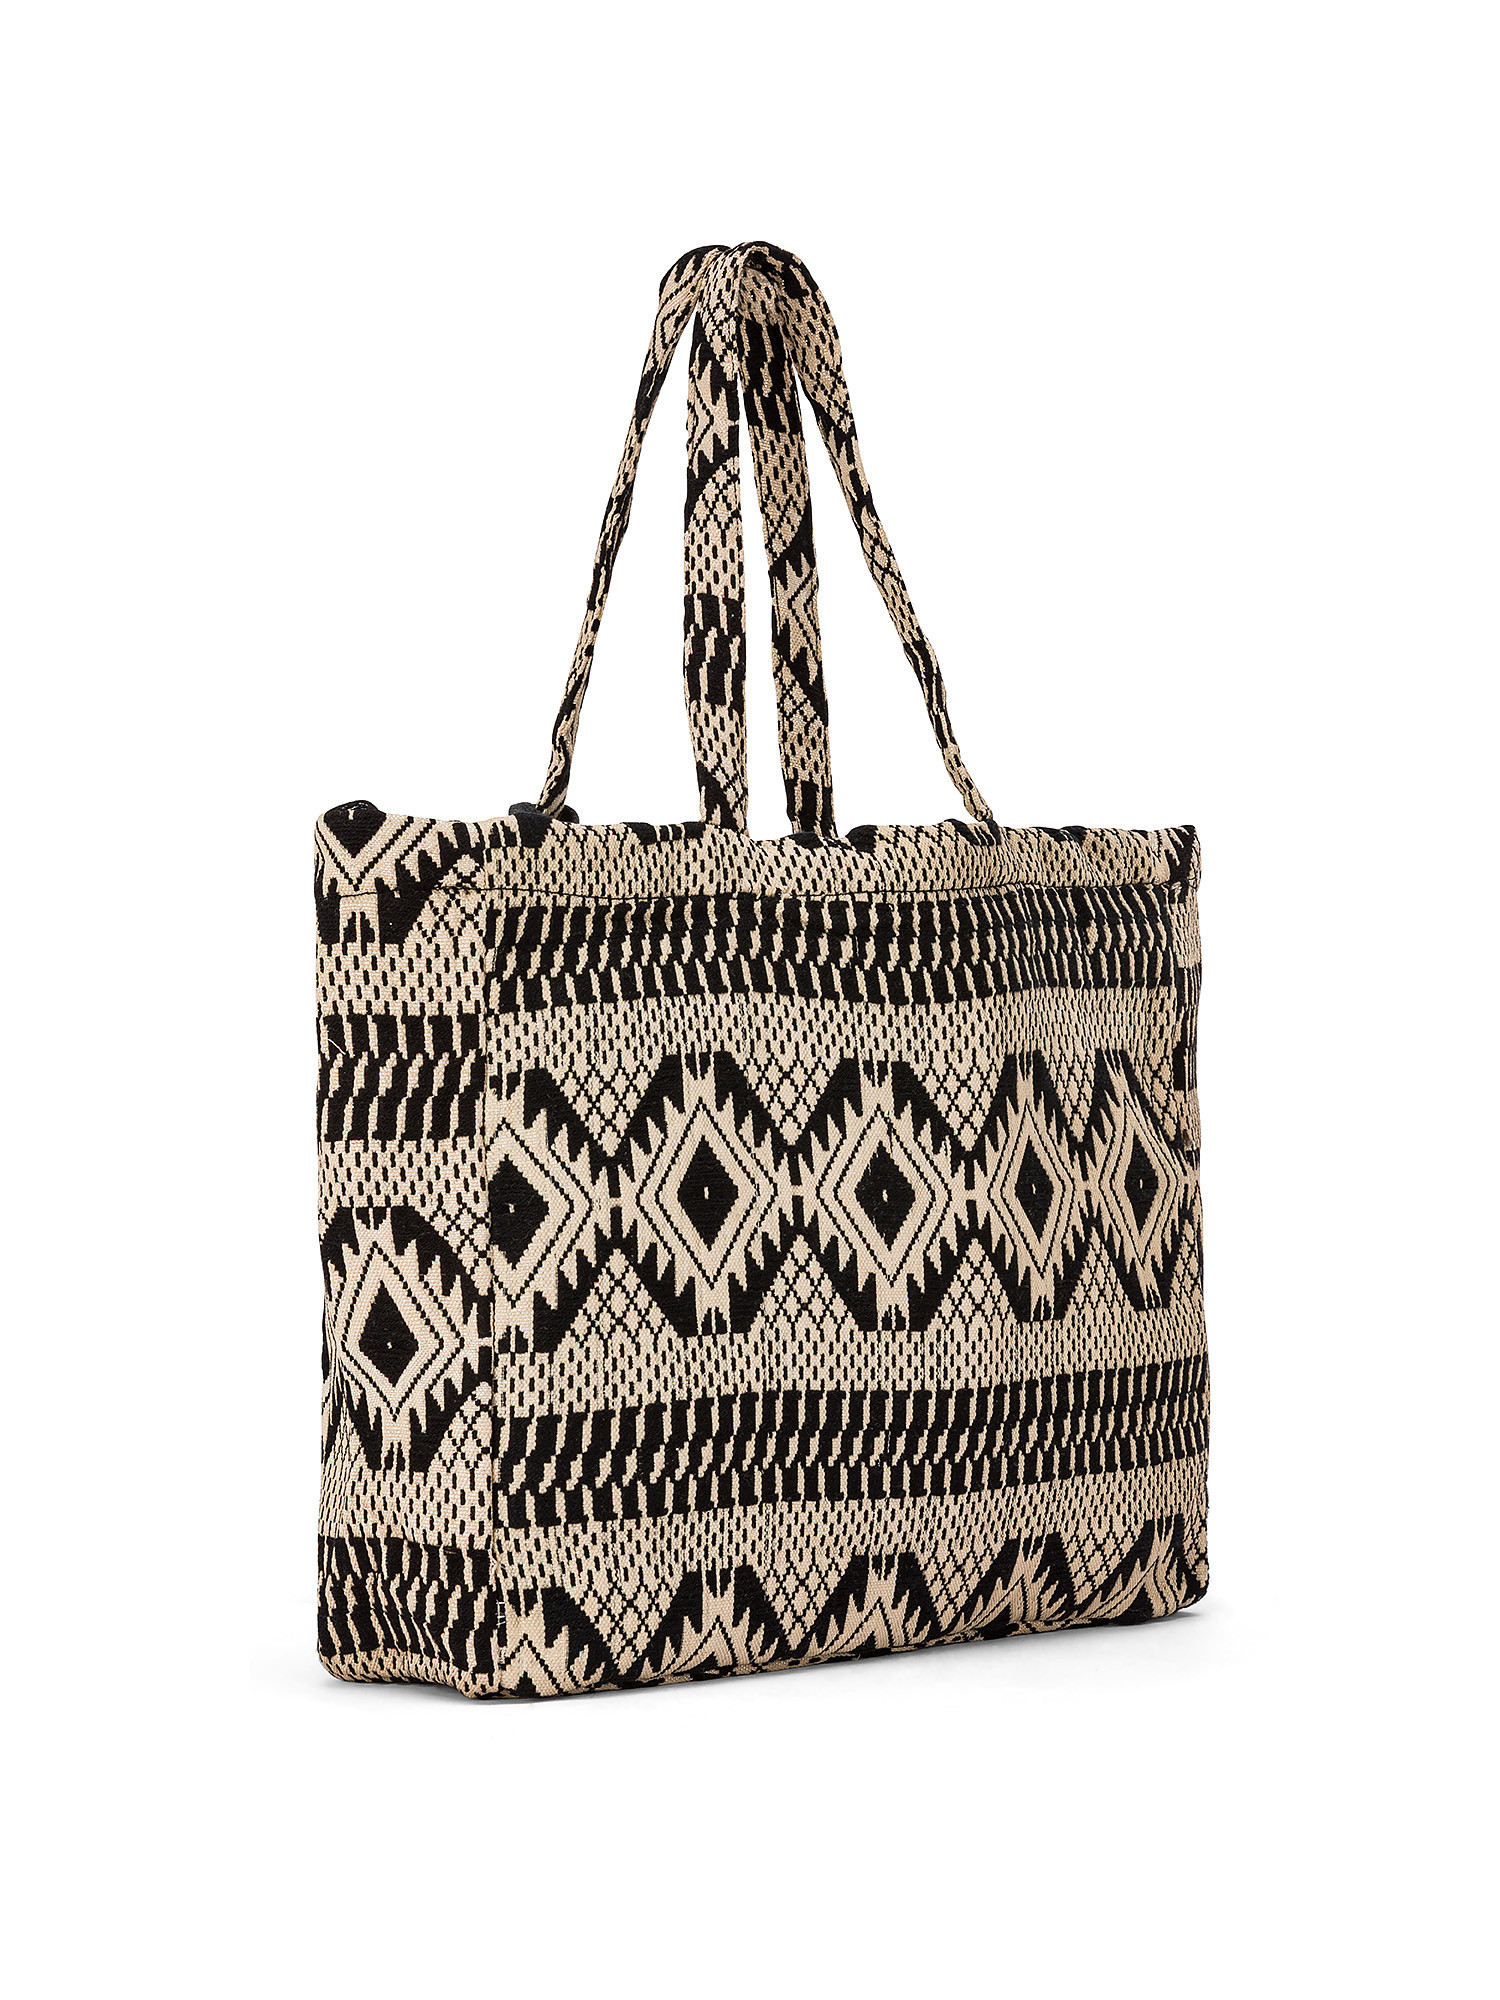 Koan - Shopping bag a fantasia, Marrone, large image number 1